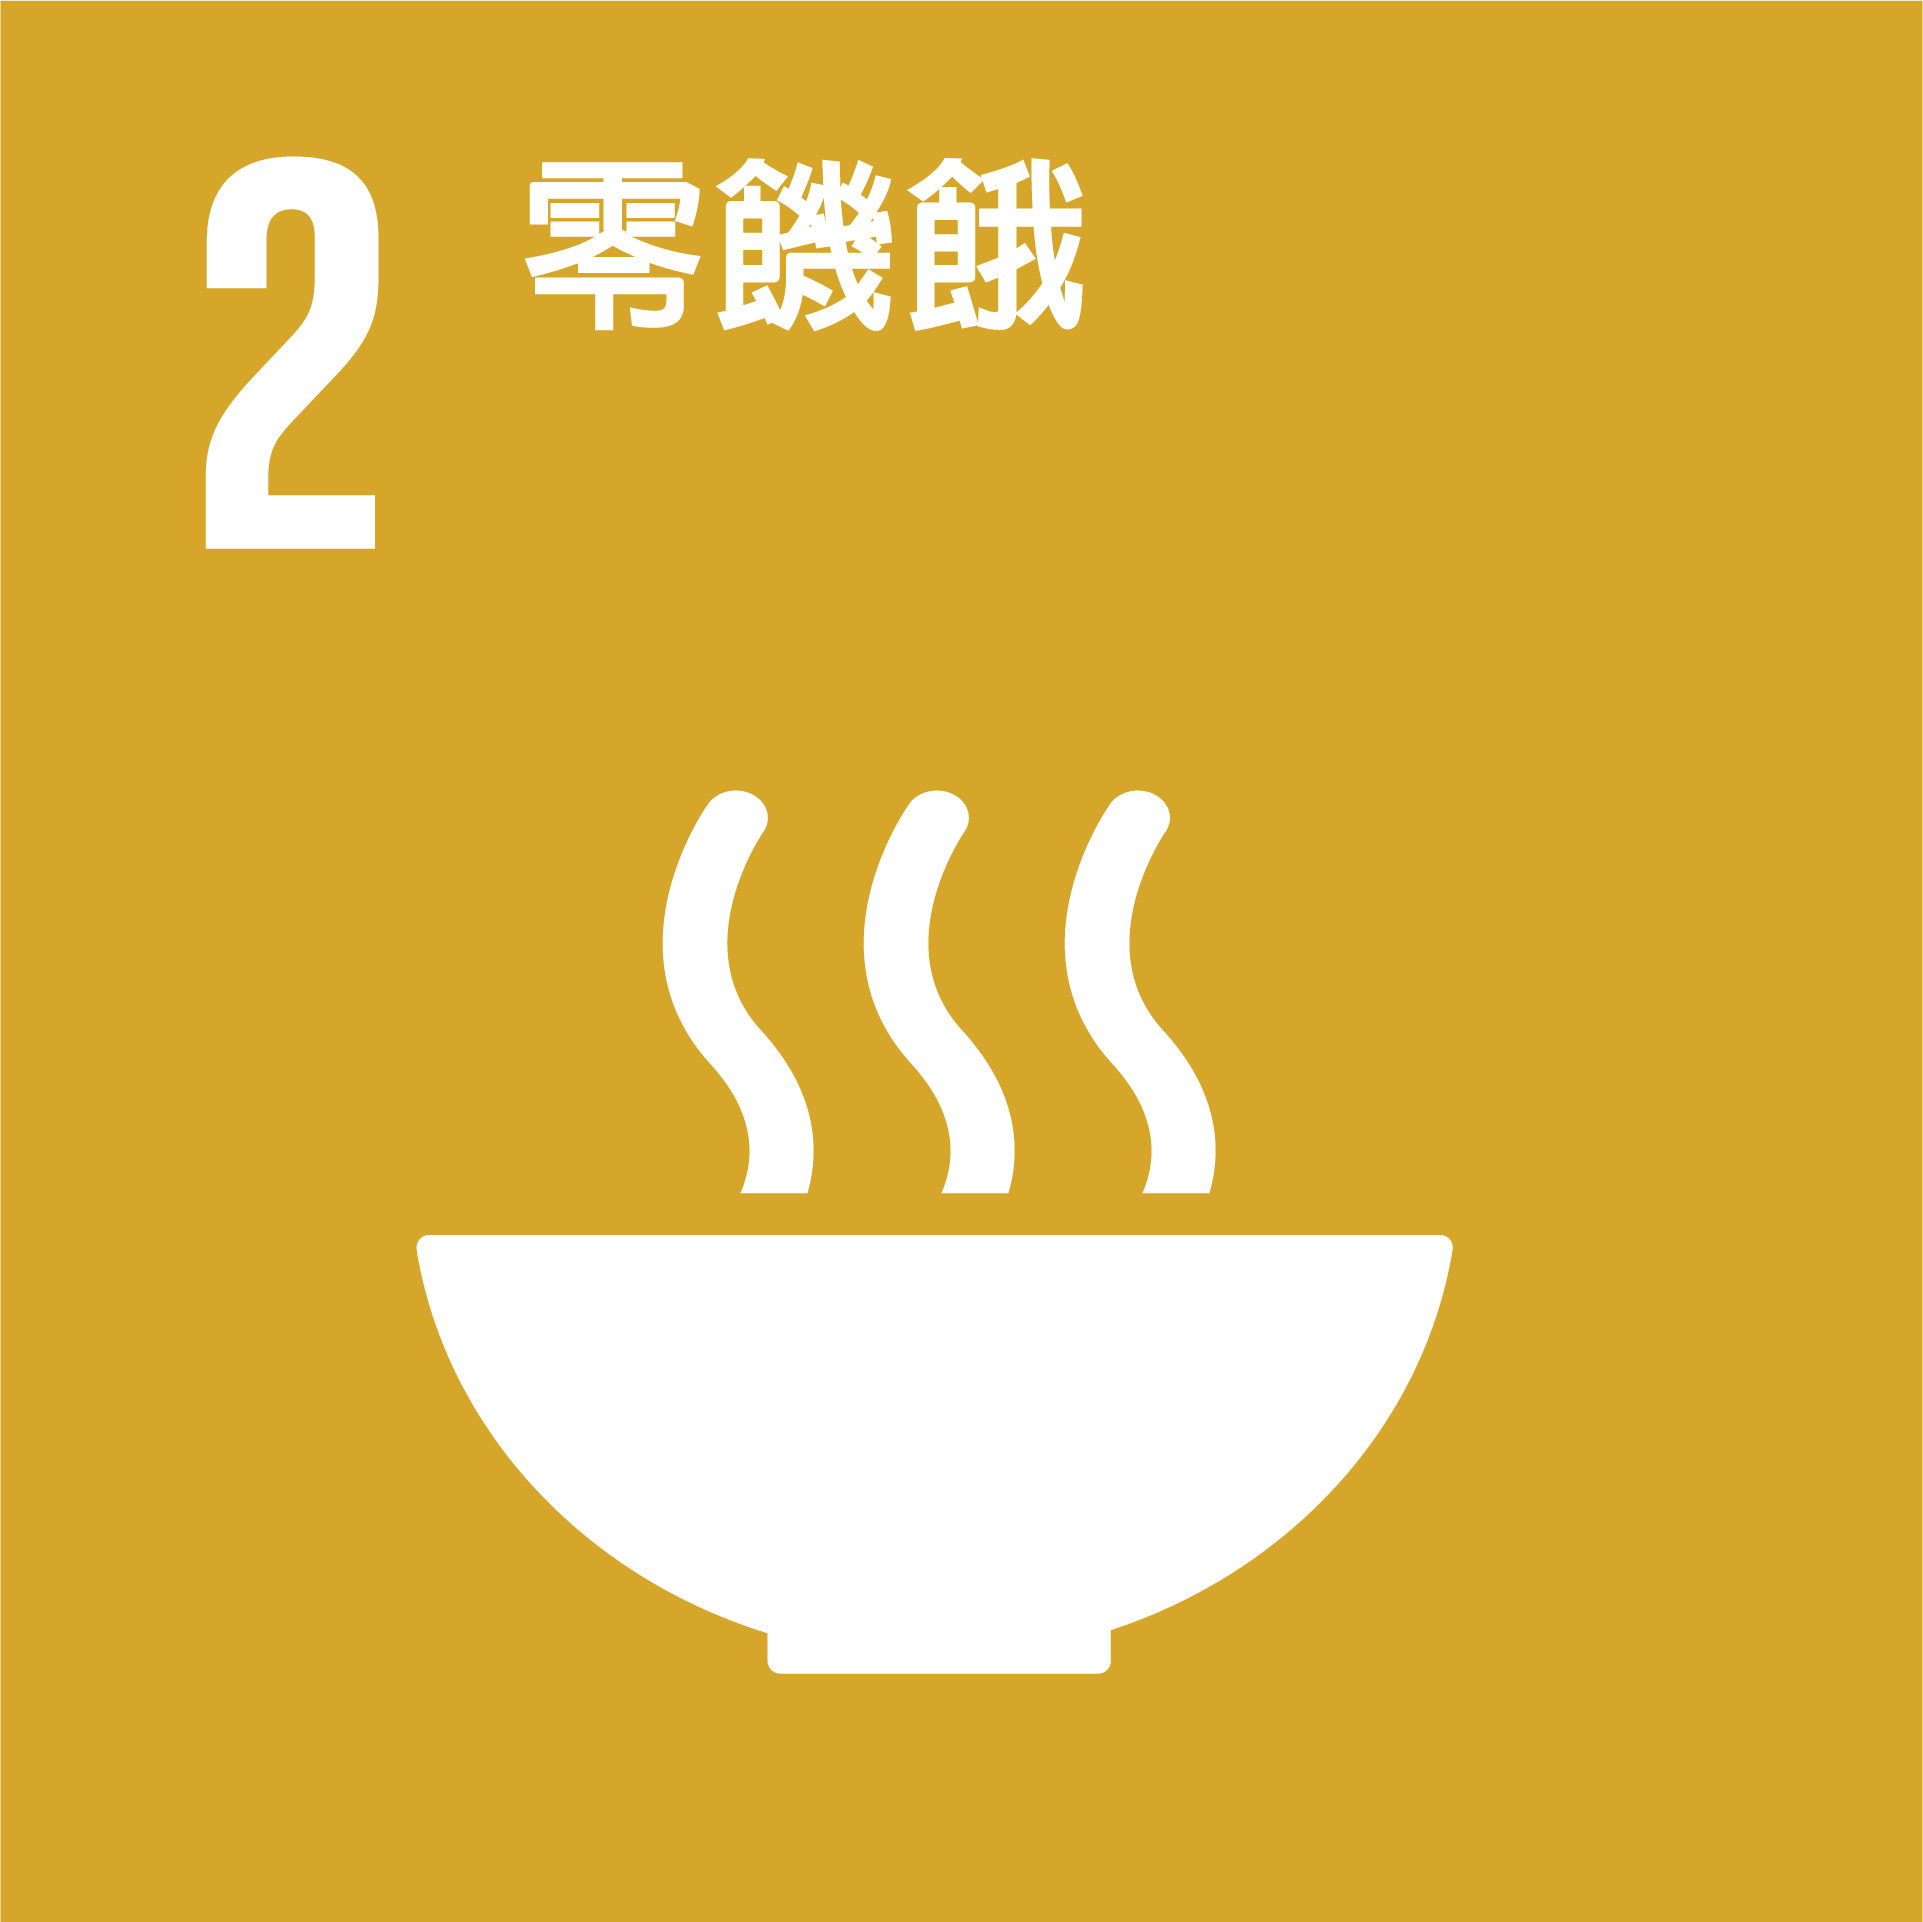 SDG vertical logo icons Chi 02